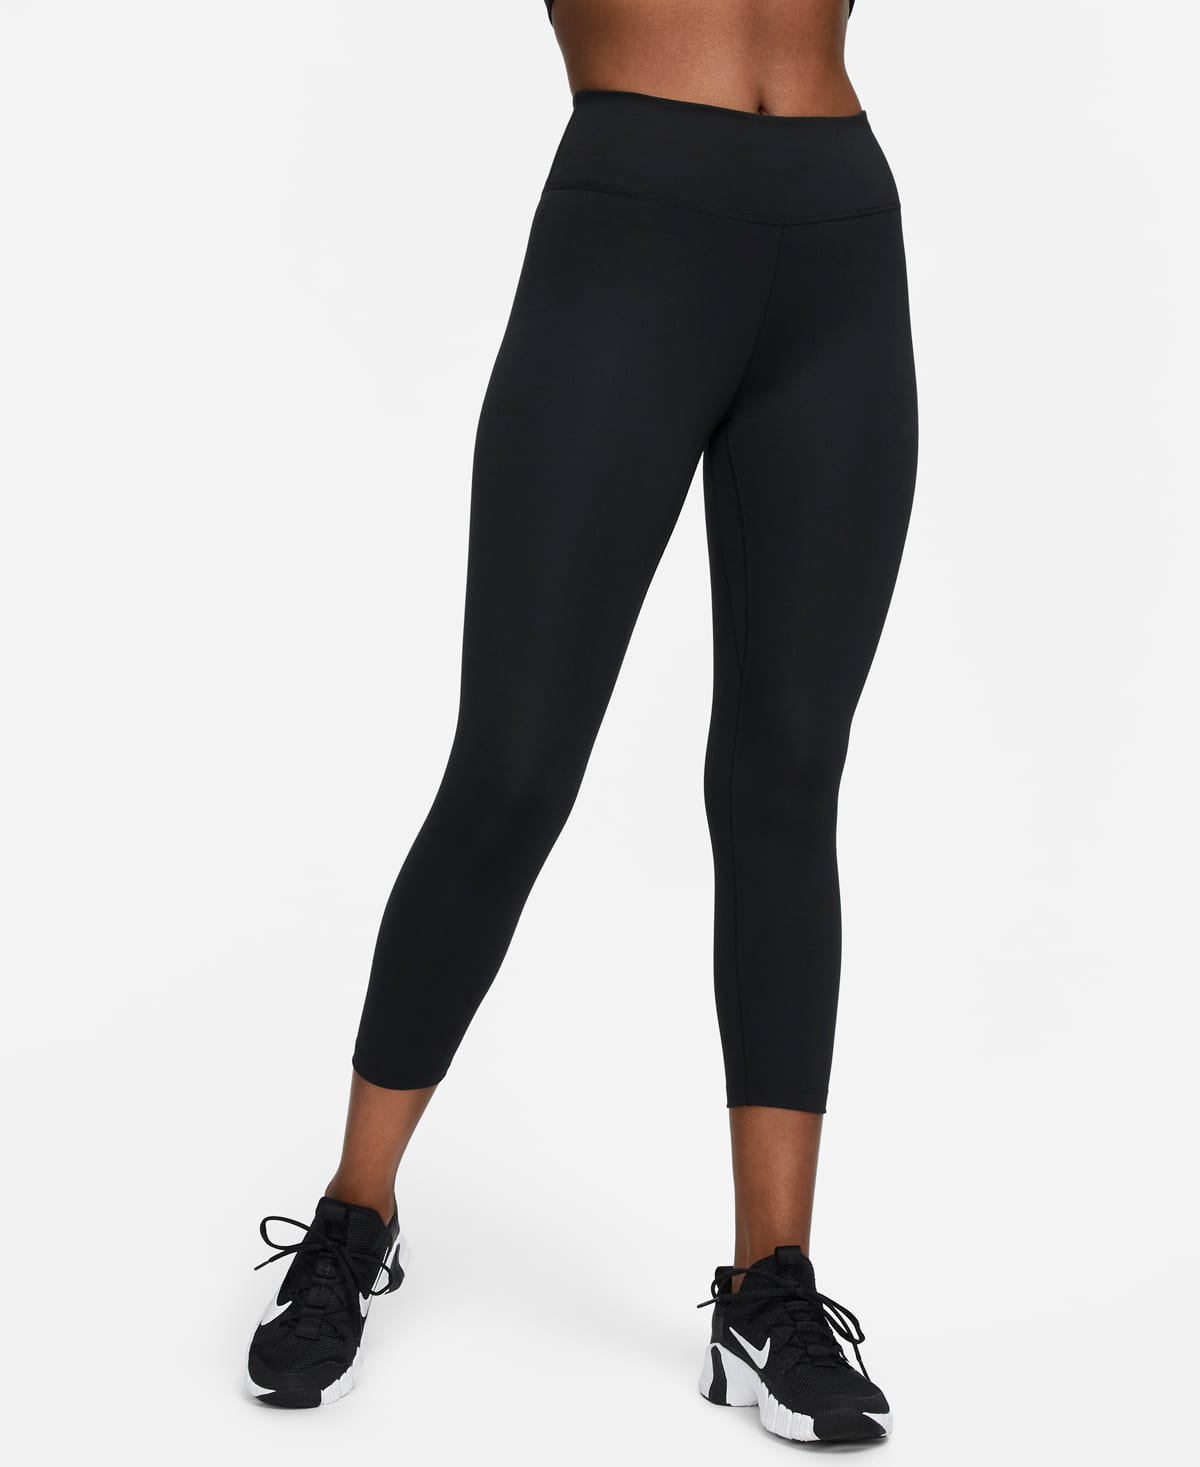 Gaseous Numeric stomach Women's Leggings Size Chart. Nike.com